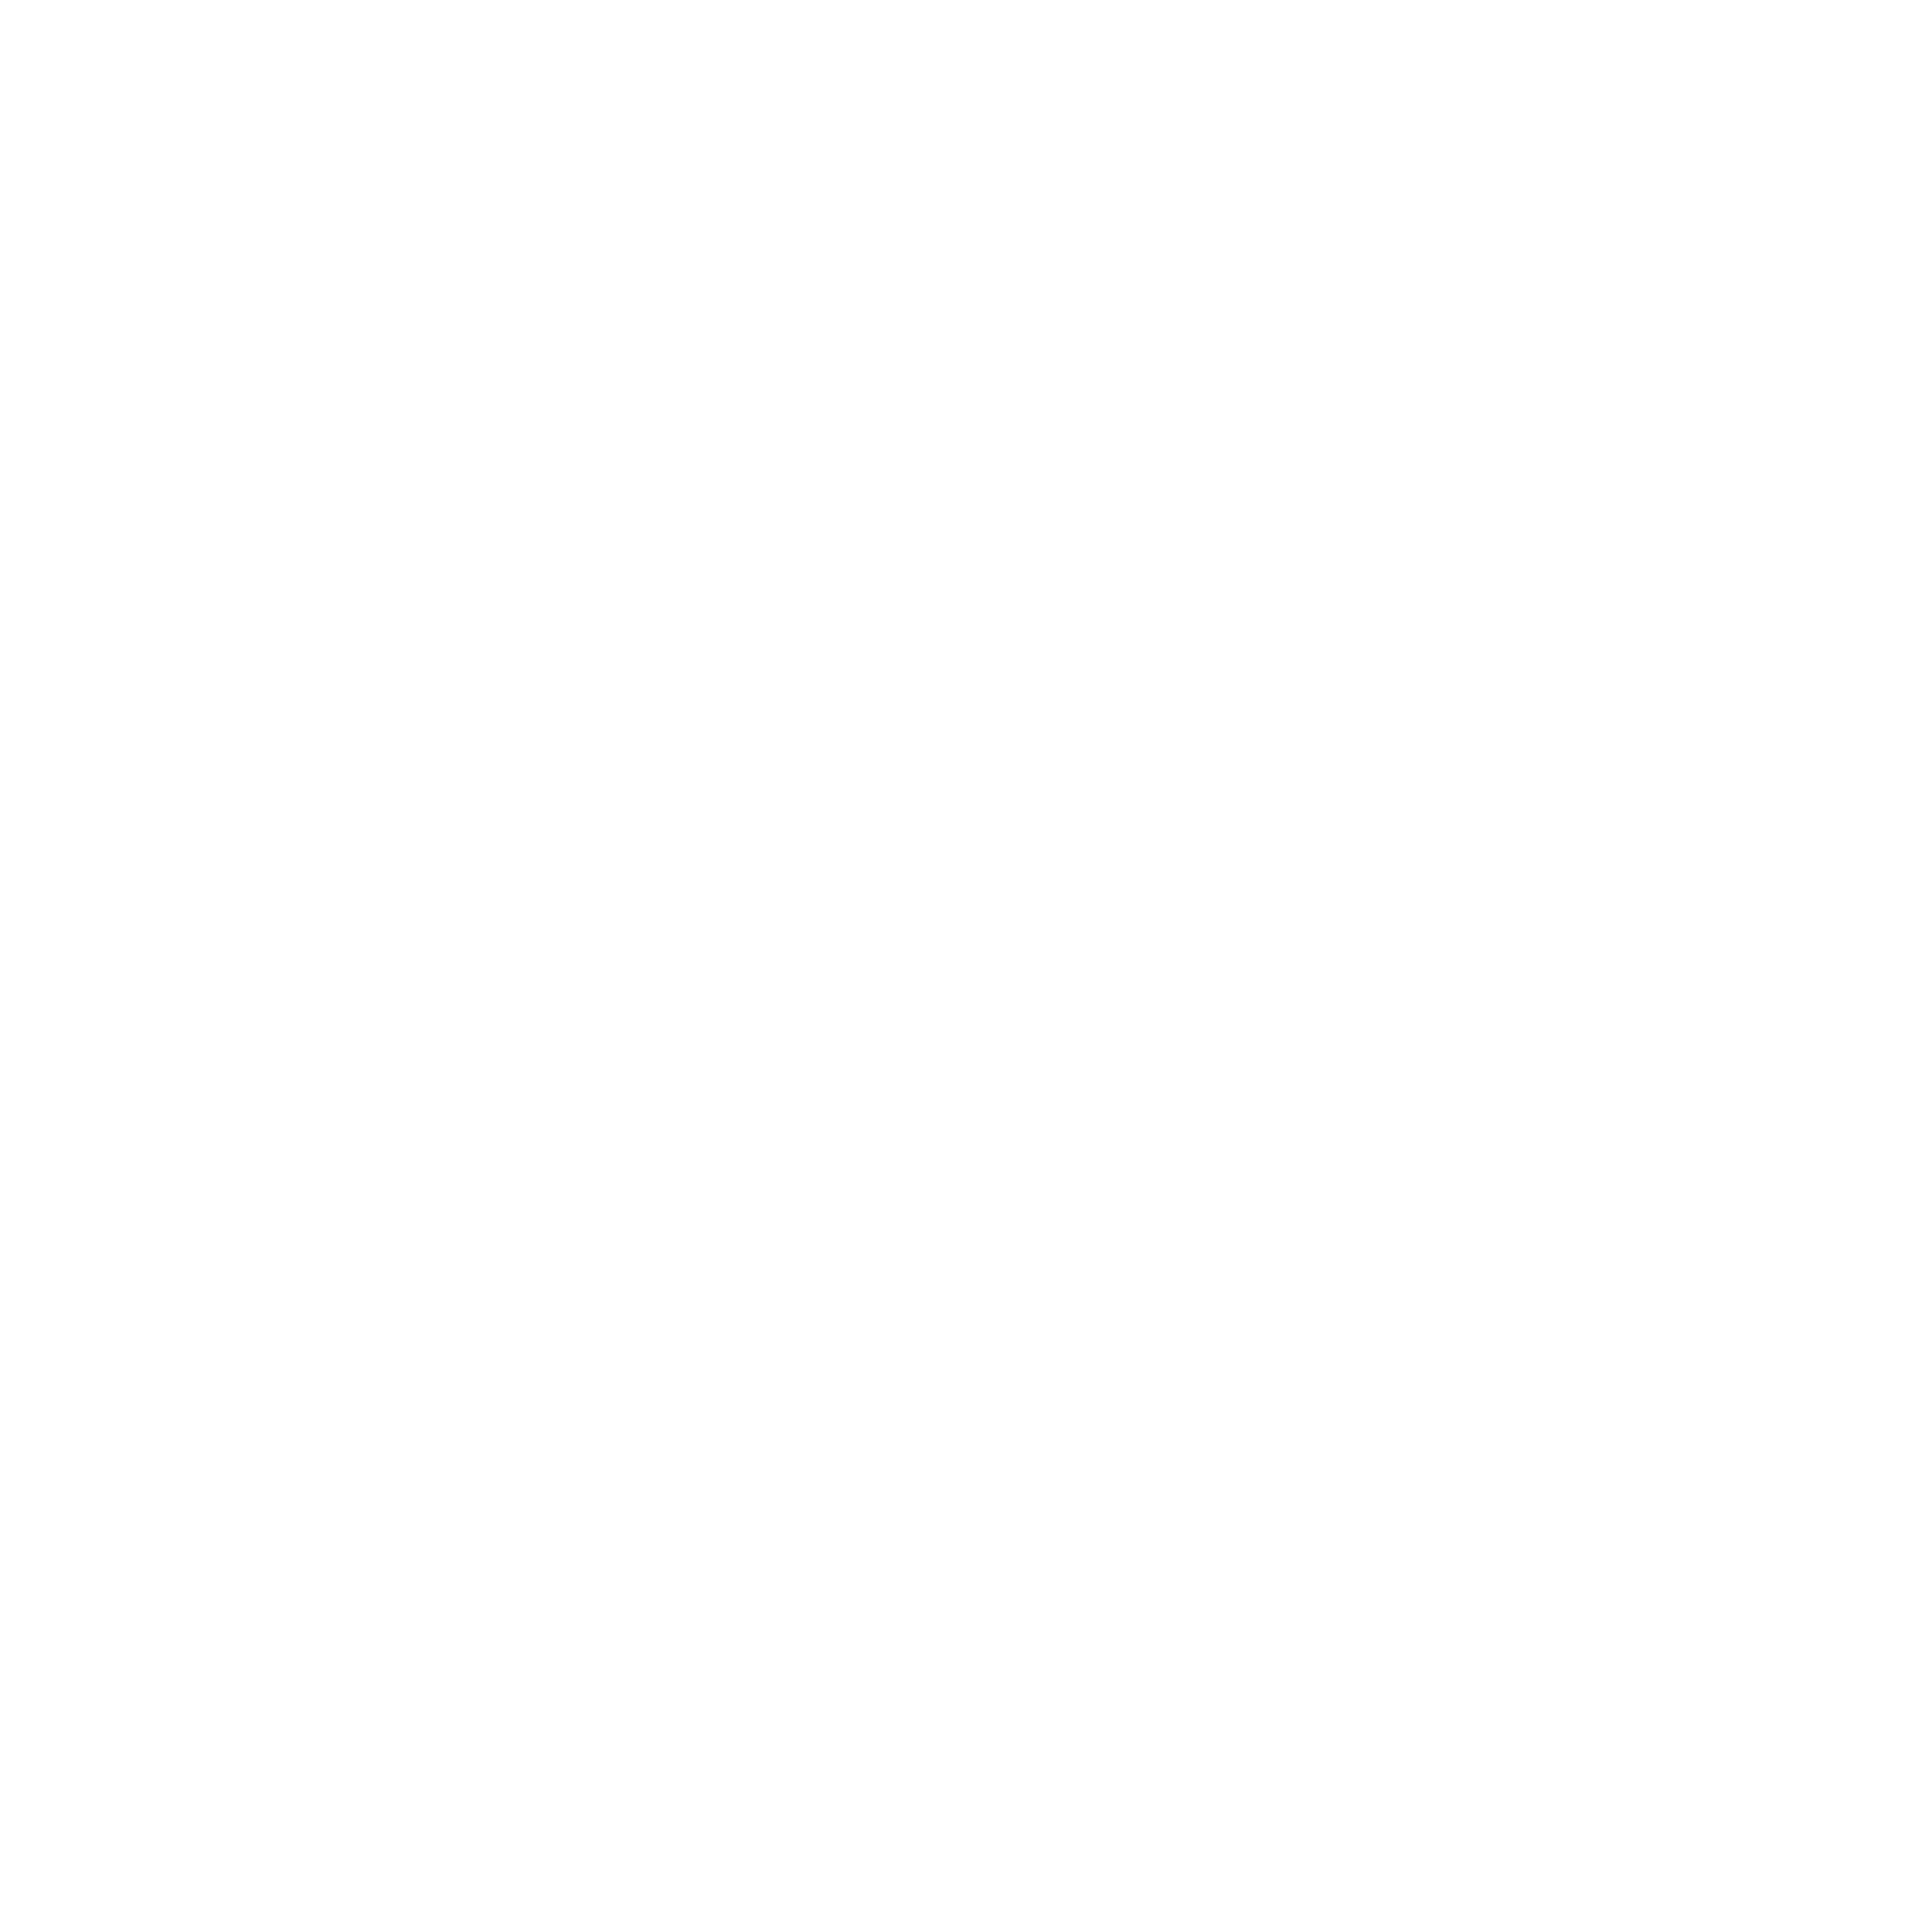 Make a Wish Logo - Make A Wish Logo PNG Transparent & SVG Vector